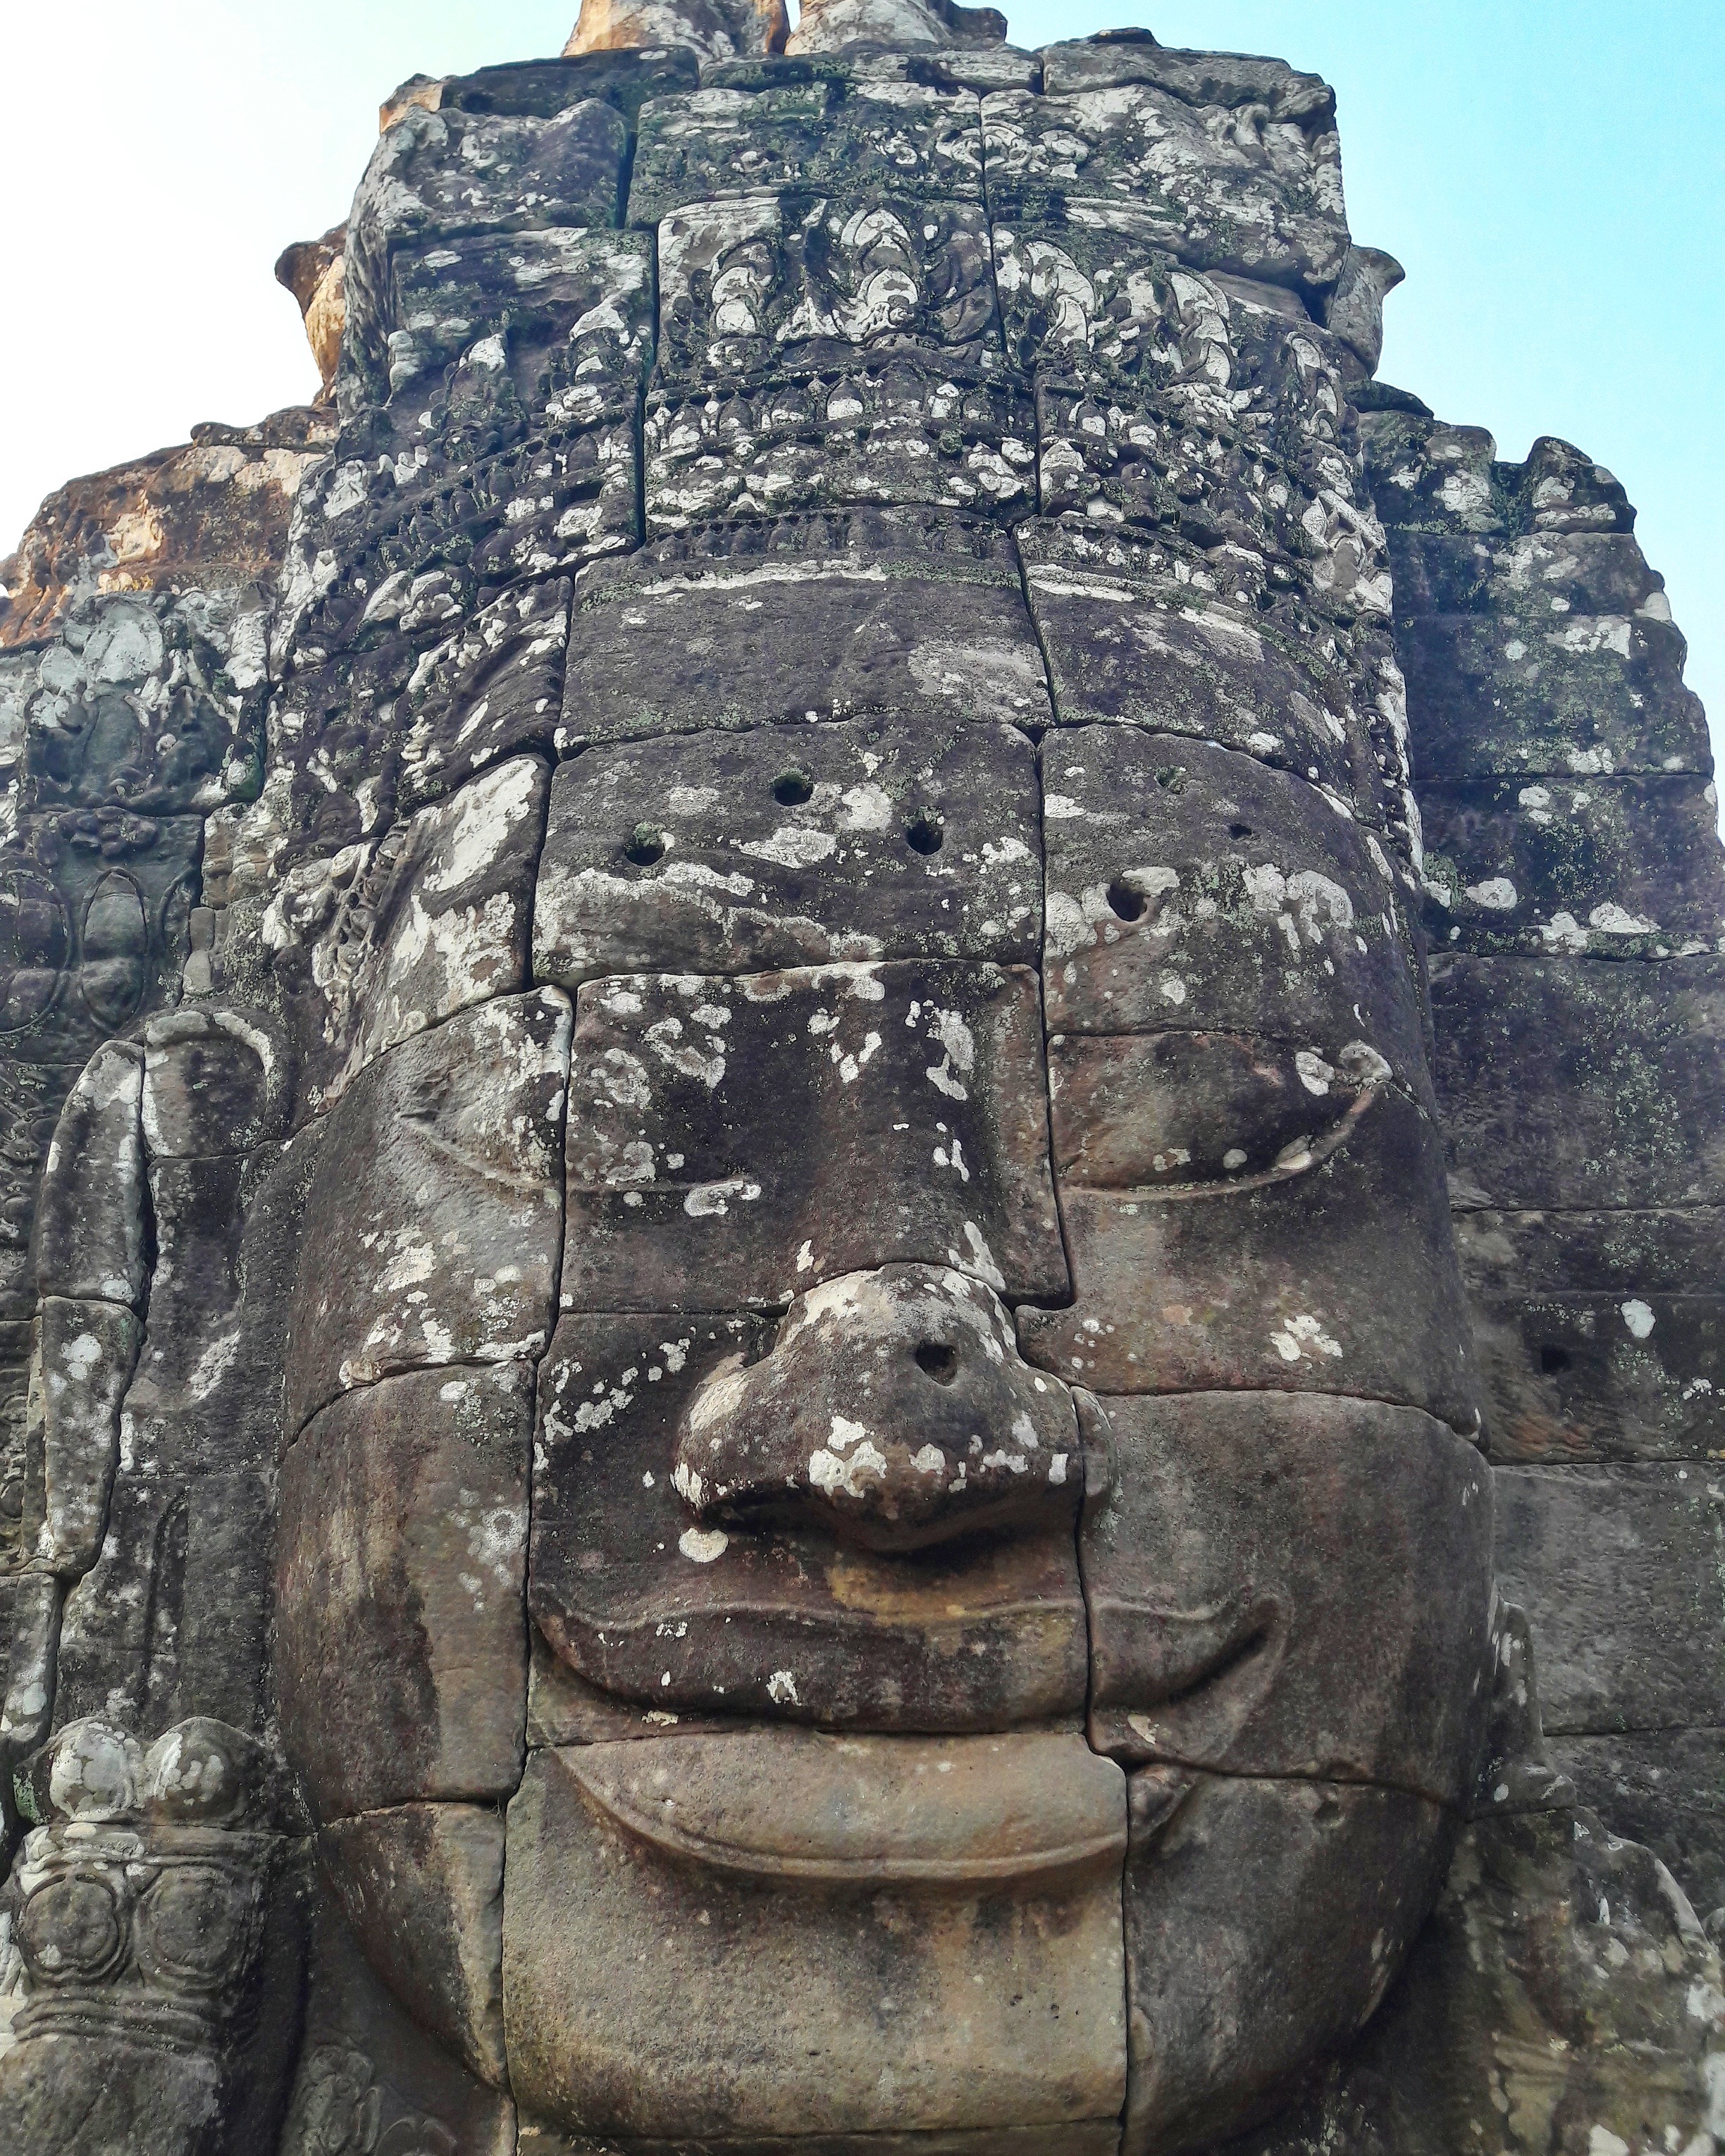 Angkor Thom - Bayon Temple - Face of the bodhisattva Avalokitesvara